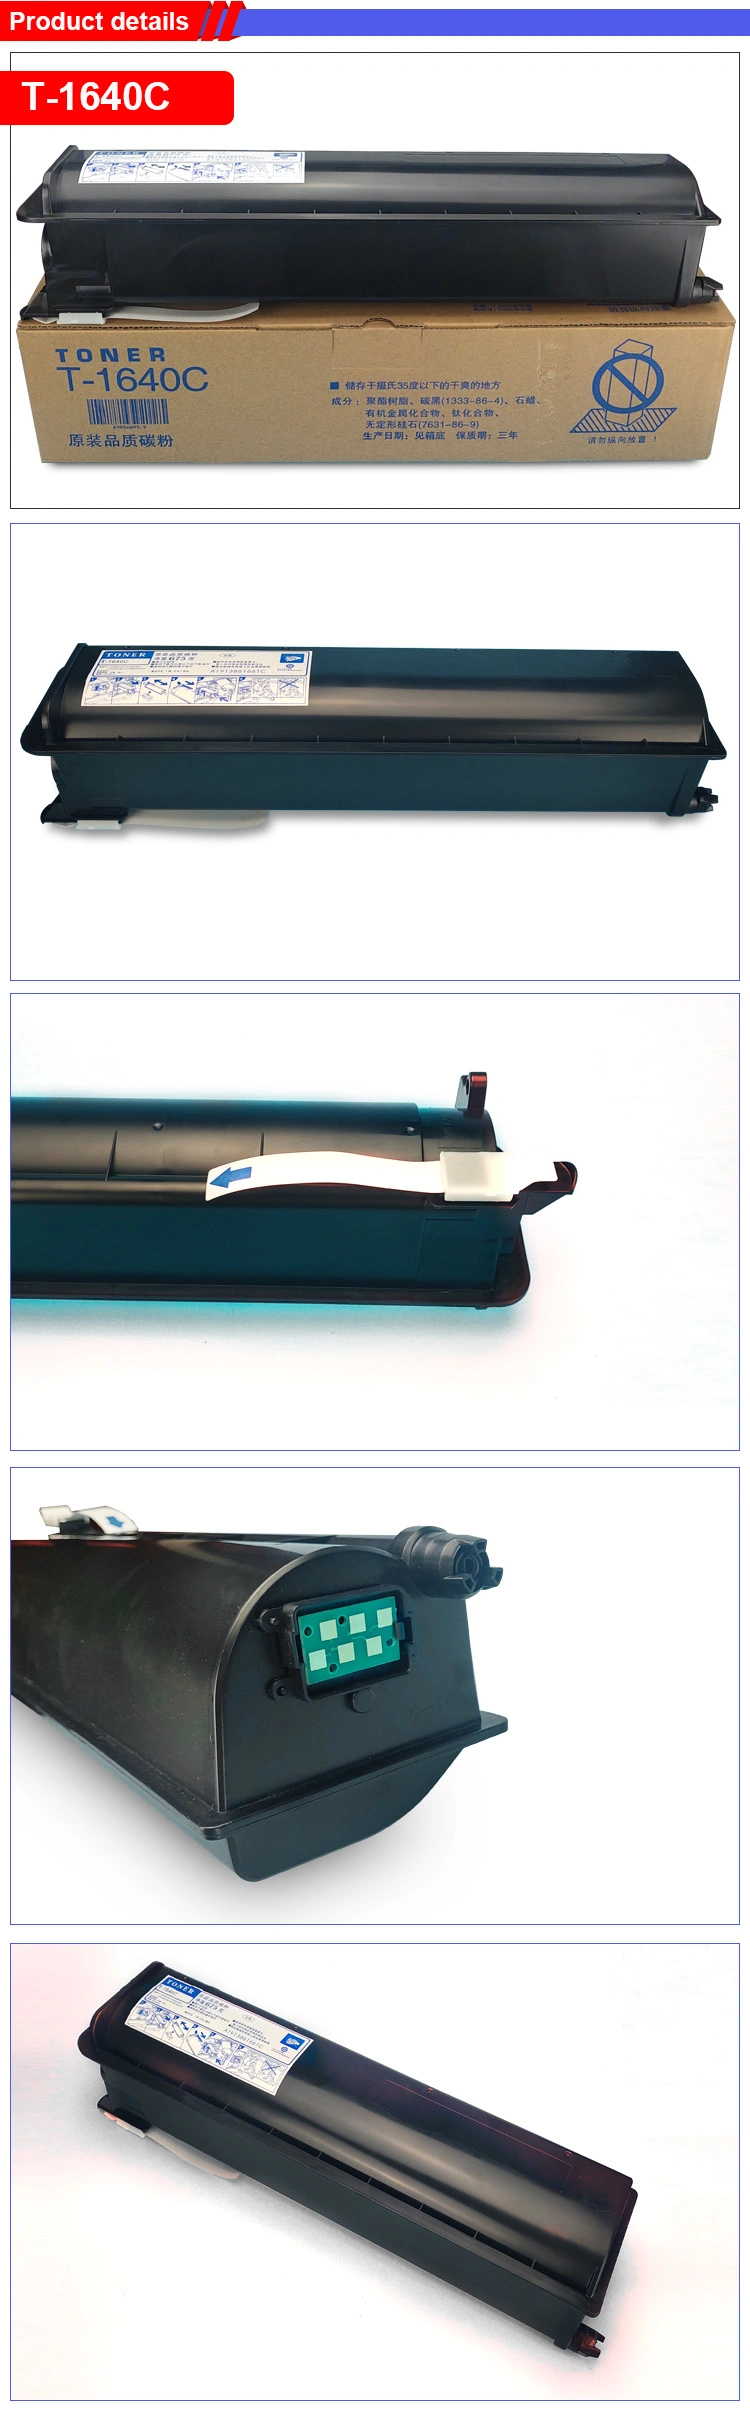 China Premium Toner Cartridge Toshiba 1640 for E-Studio 163/165/166/167/205/207/237